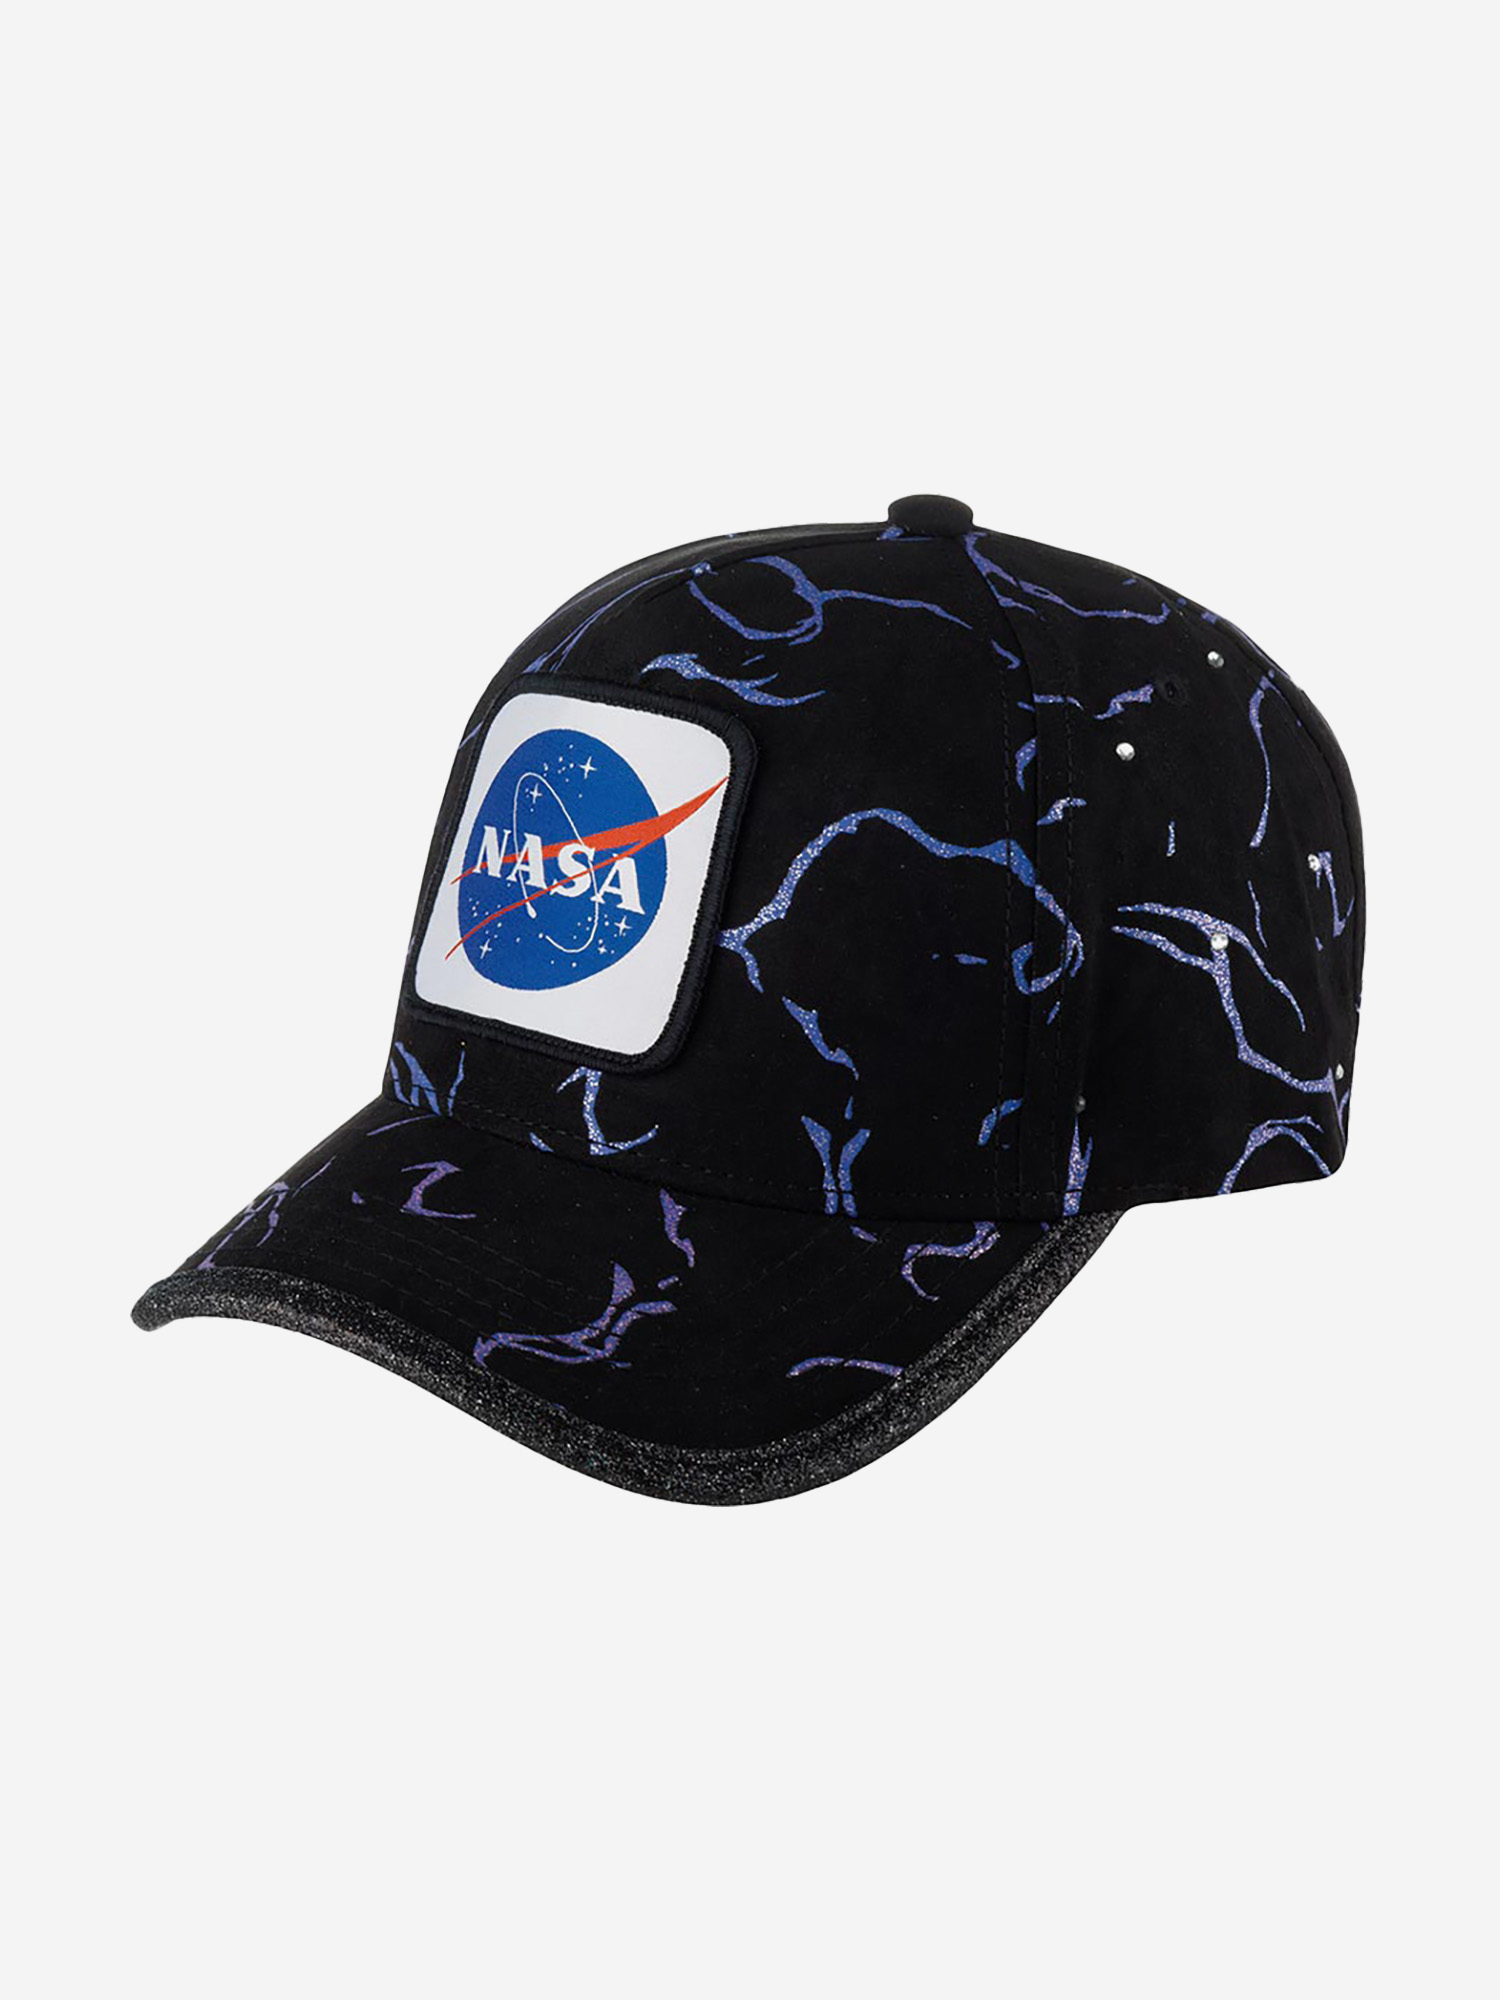 Бейсболка CAPSLAB CL/NASA/1/TAG/GLI NASA (черный), Черный nasa archives